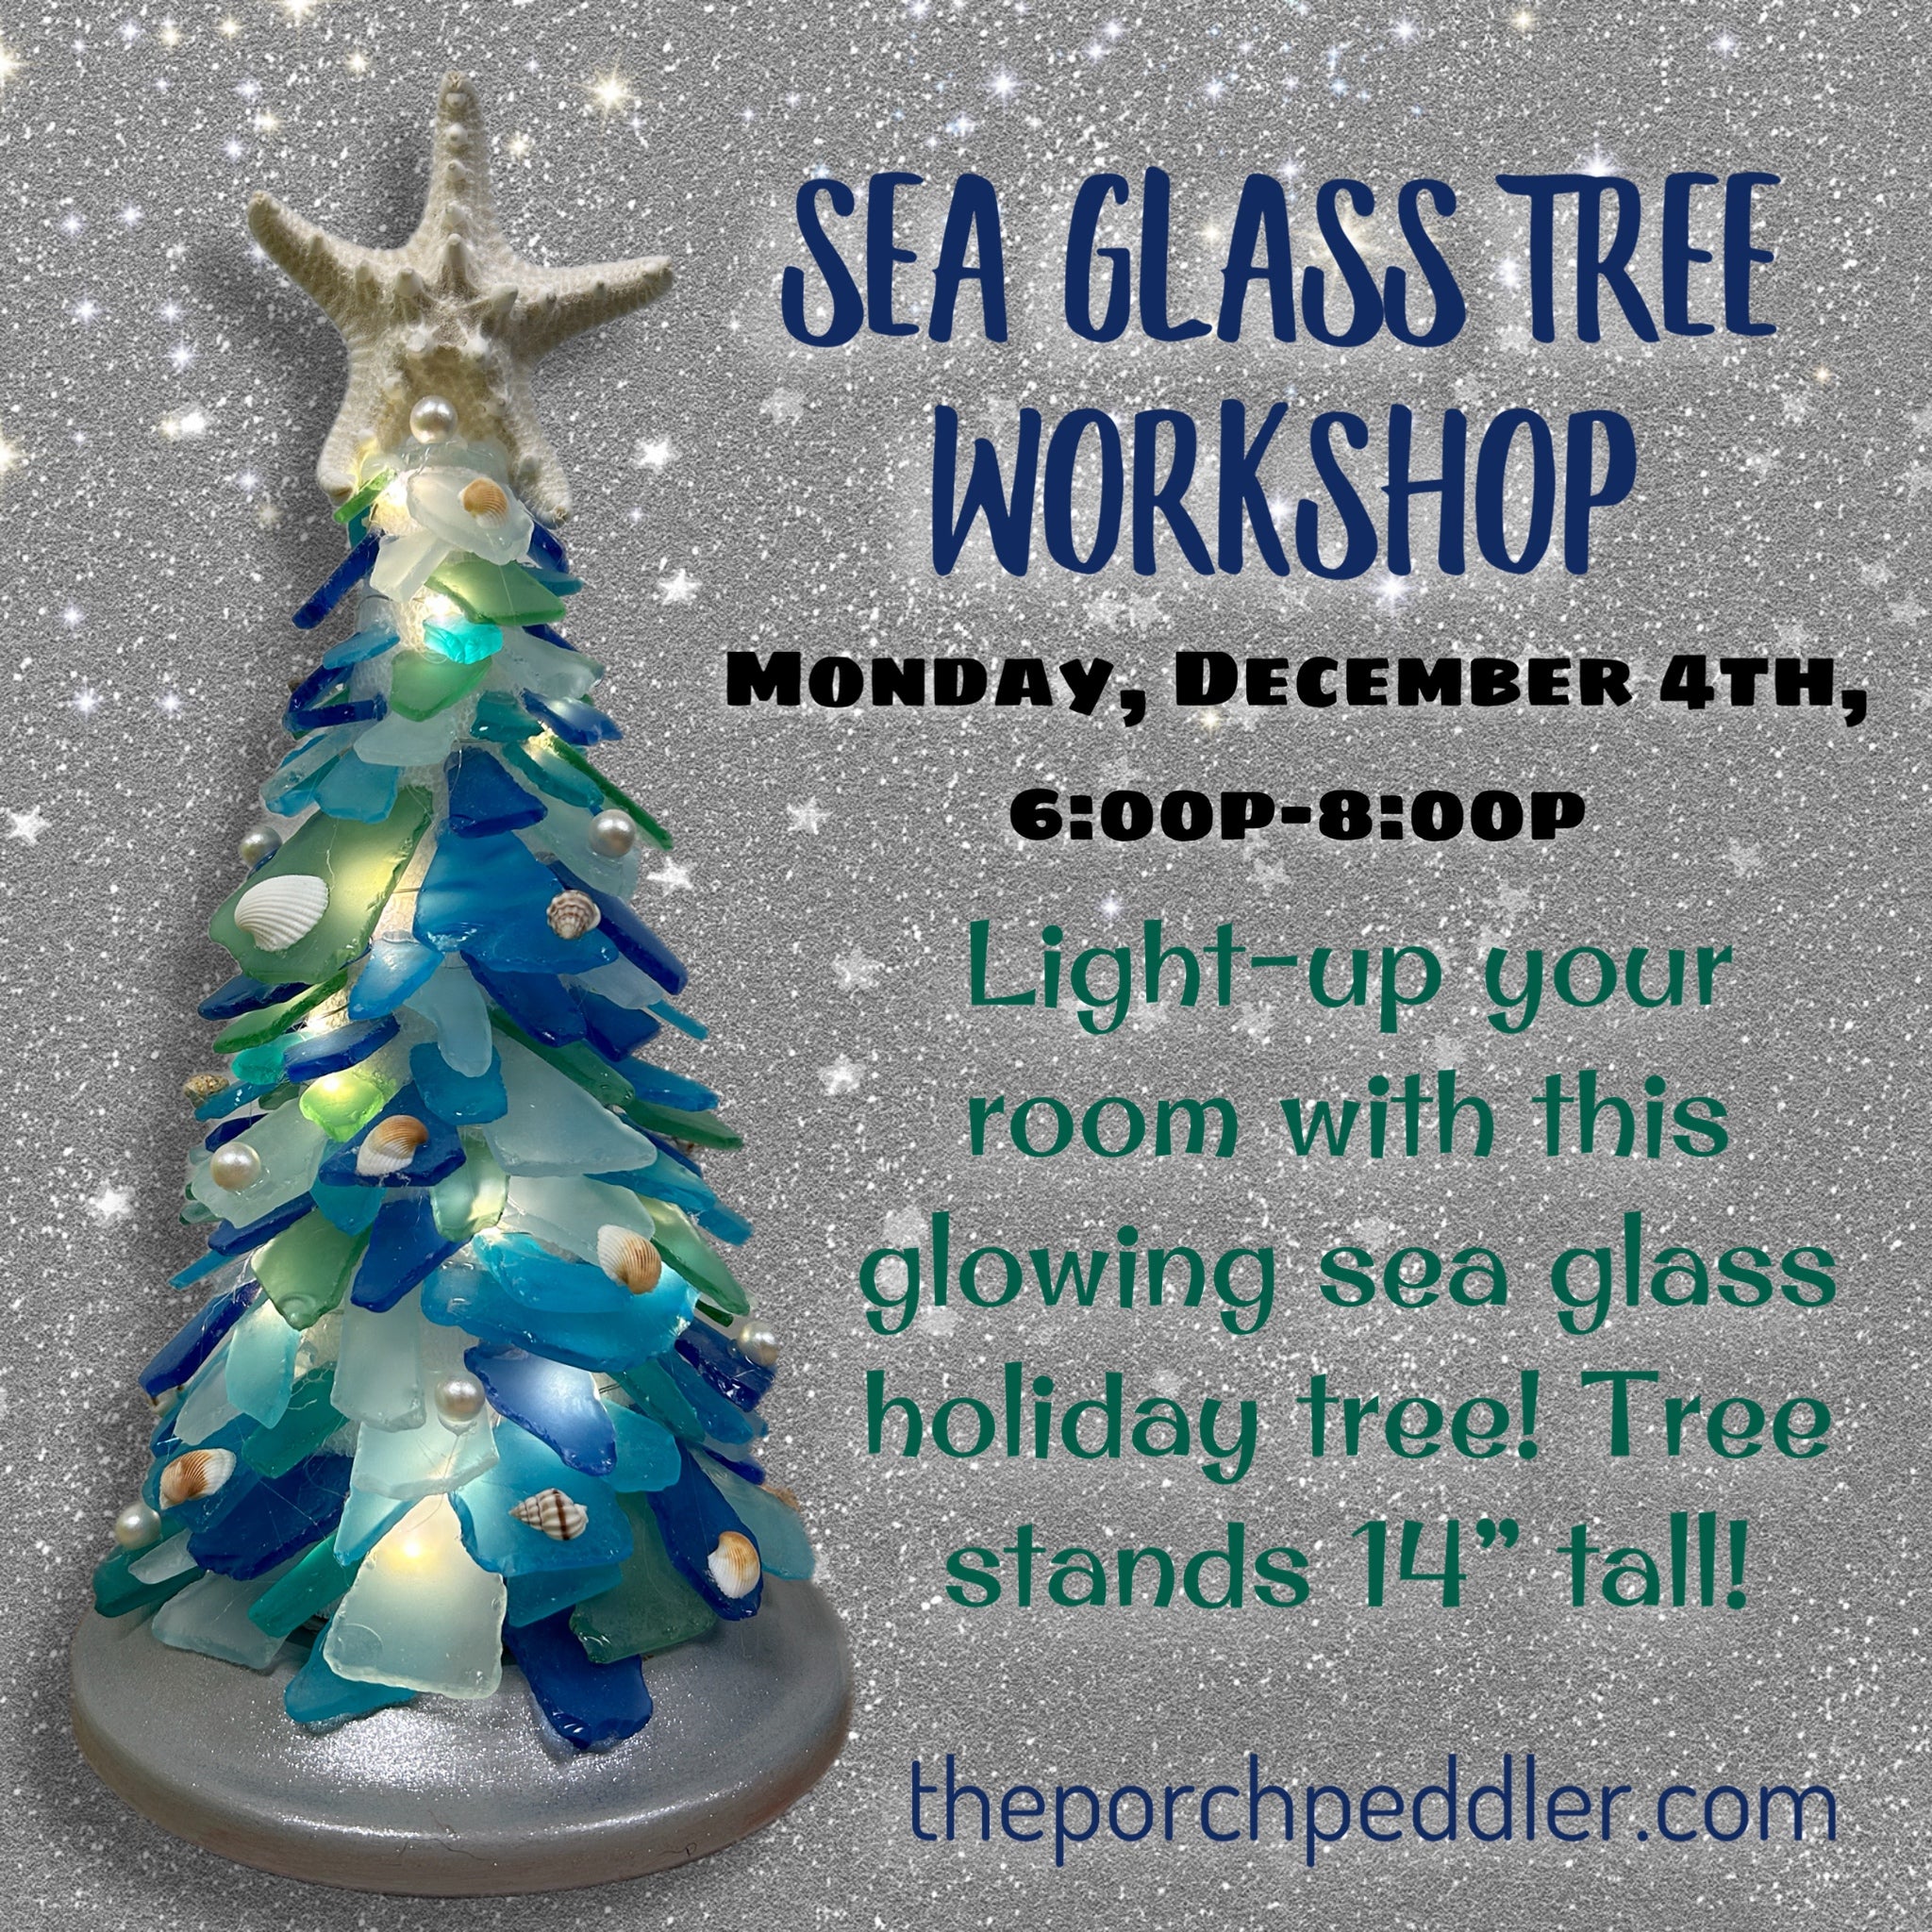 Monday, December 4th - Sea Glass Tree Workshop (6-8p)